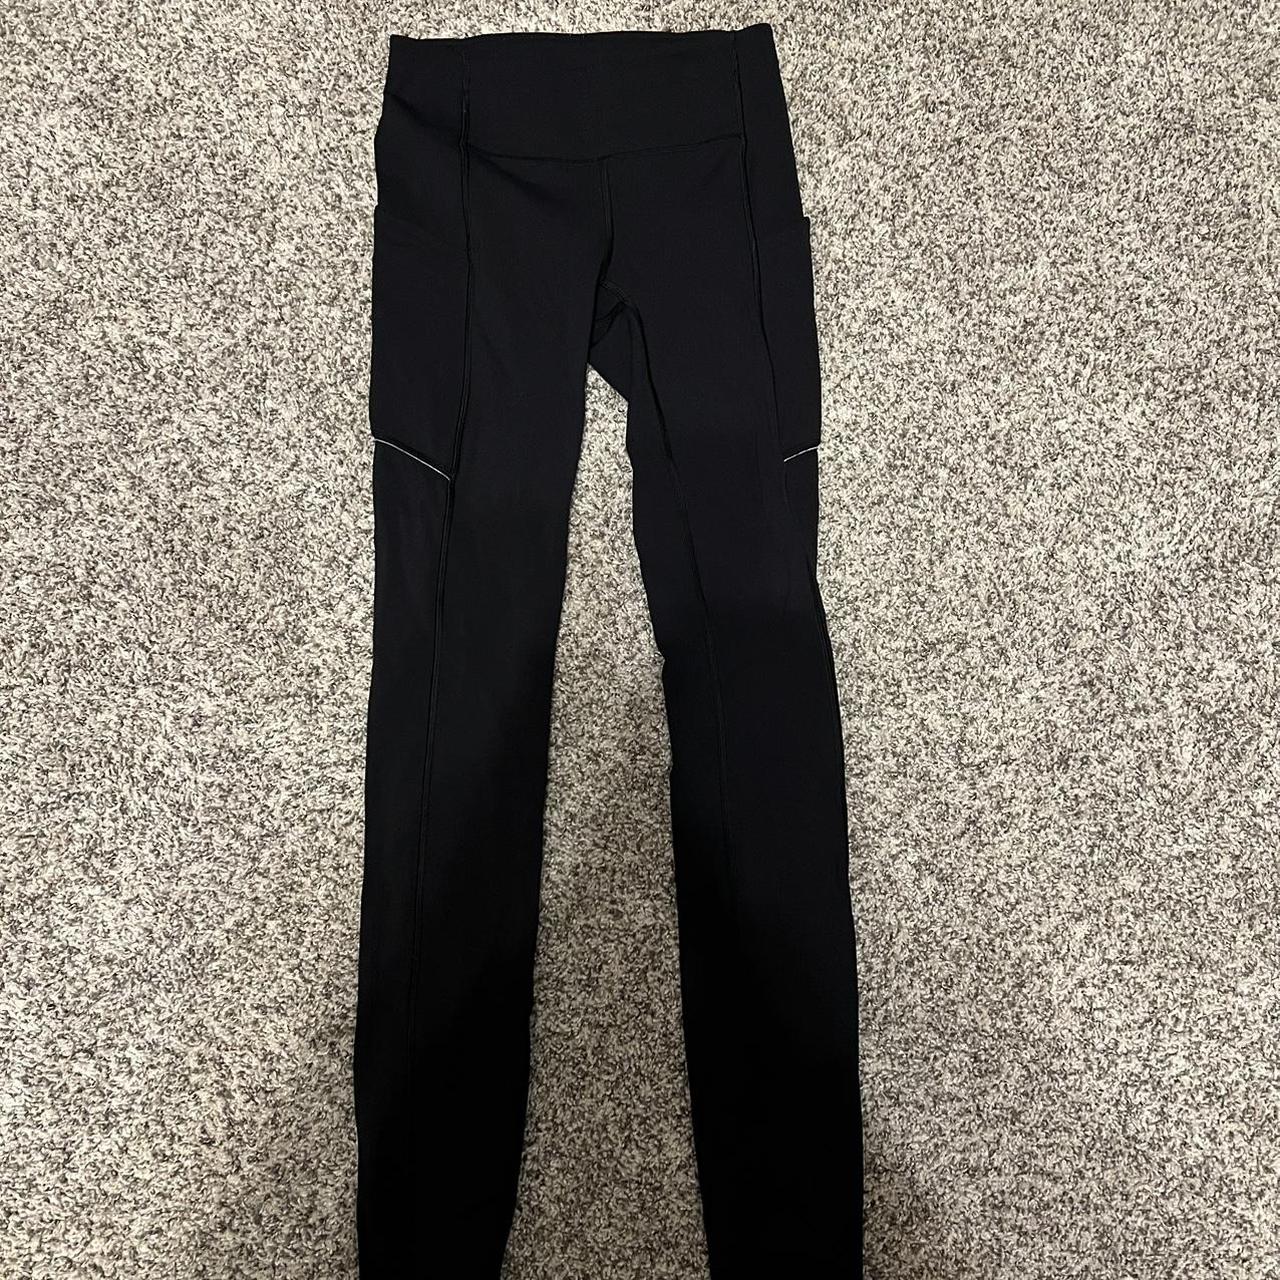 lululemon leggings with pockets black with grey - Depop